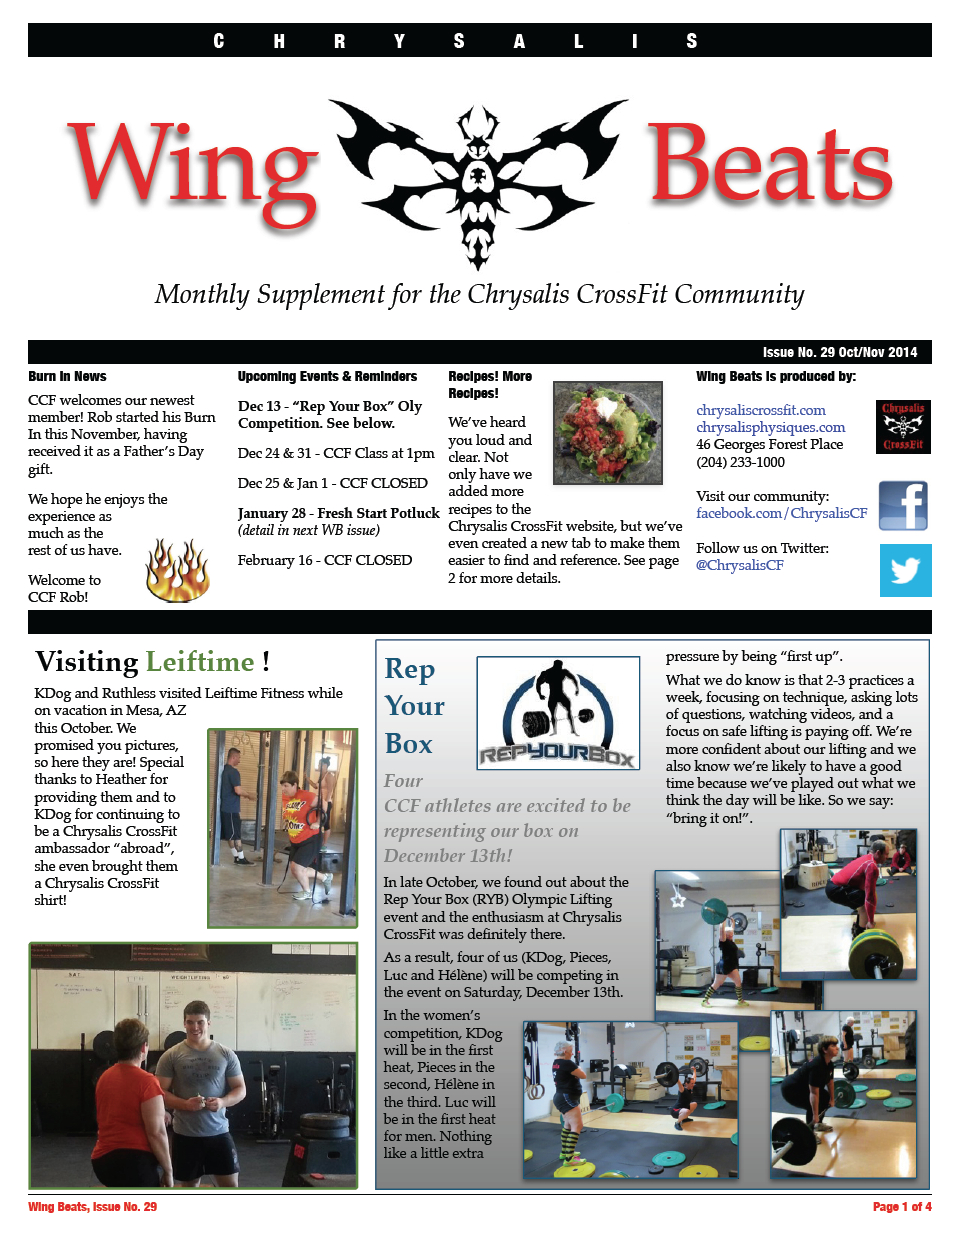 WingBeats Issue #29 - OctNov 2014